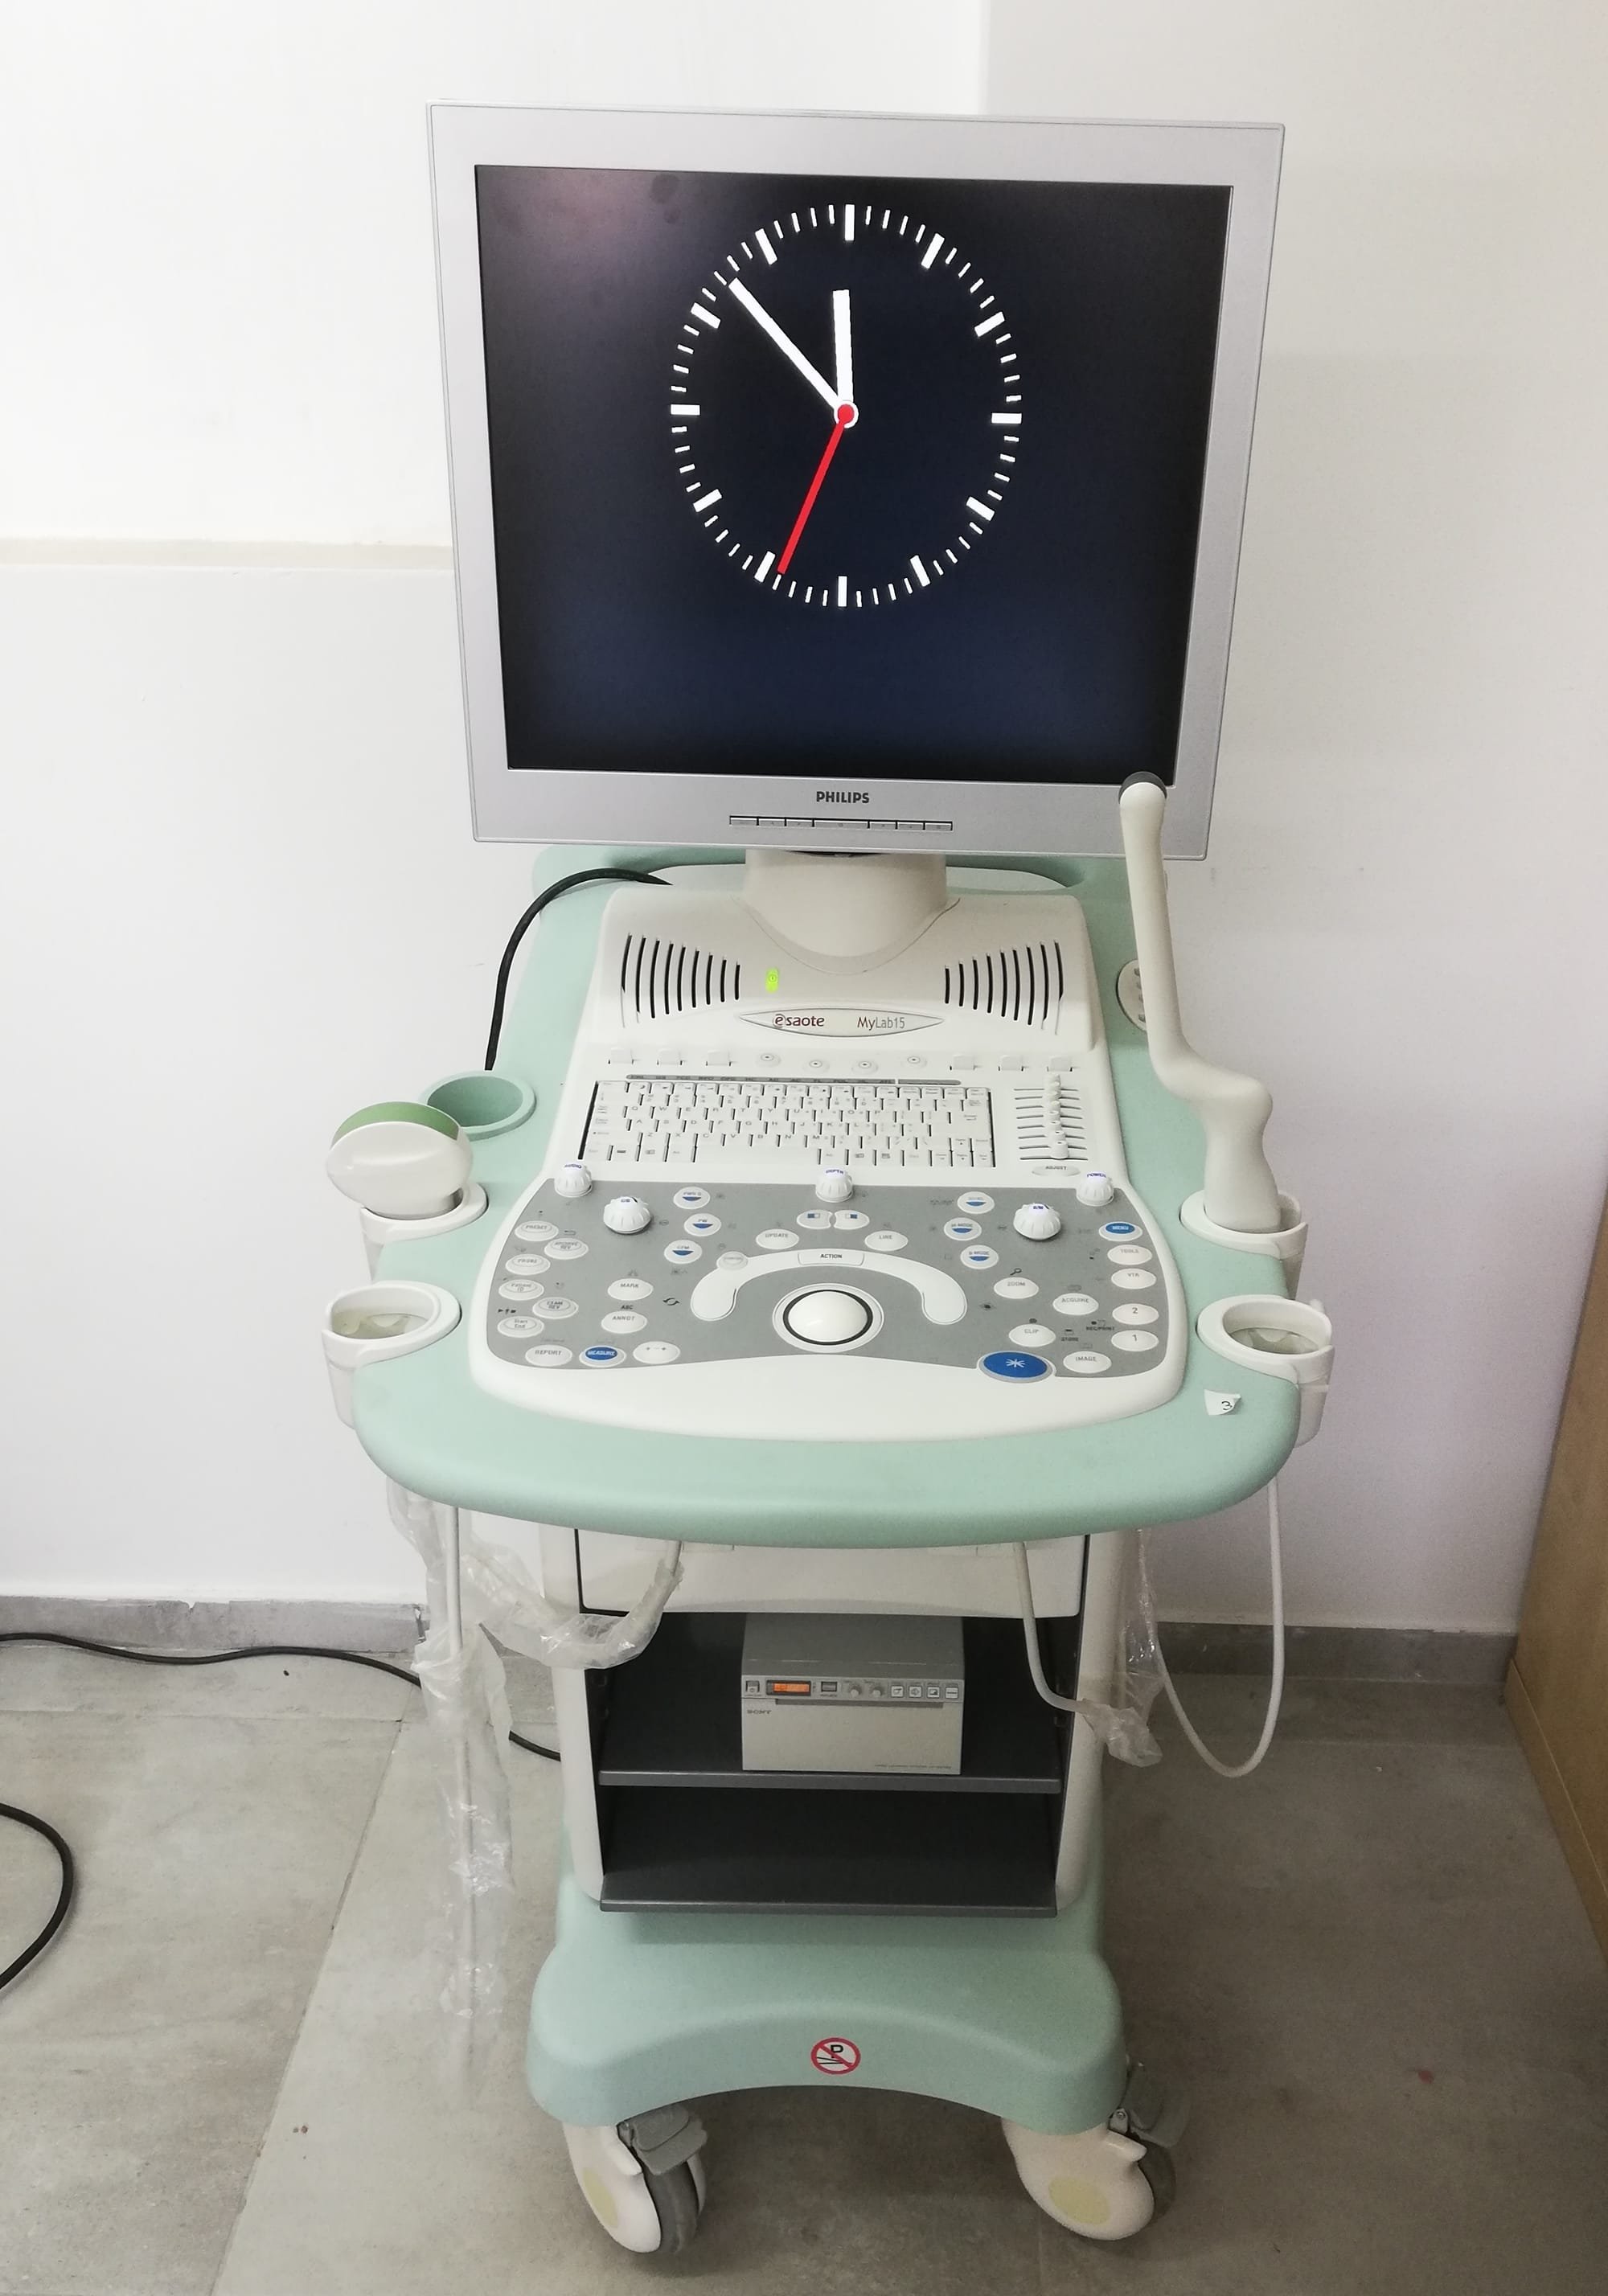 Esaote MyLab 15 Ultrasound system